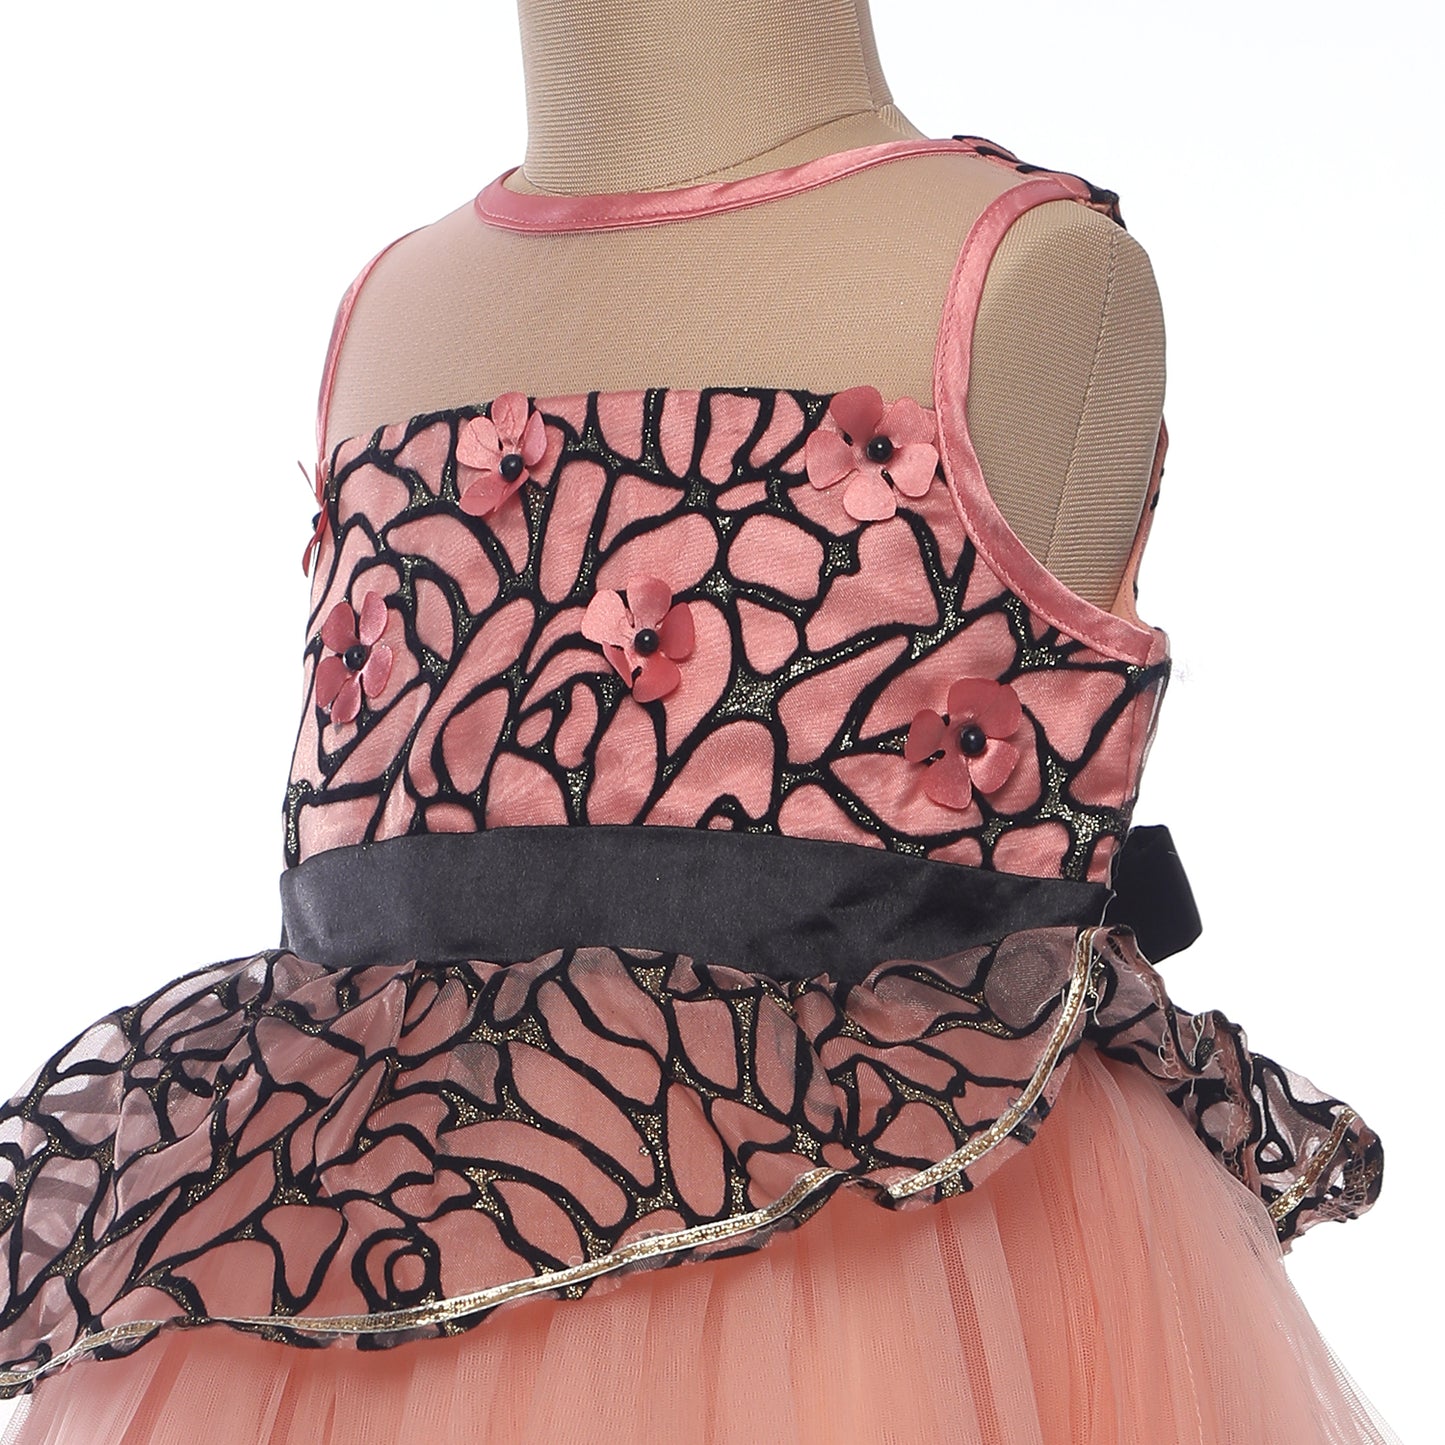 Peach n Black Flower Petal Dress - Flower Girls , Weddings, Birthdays , Photoshoots